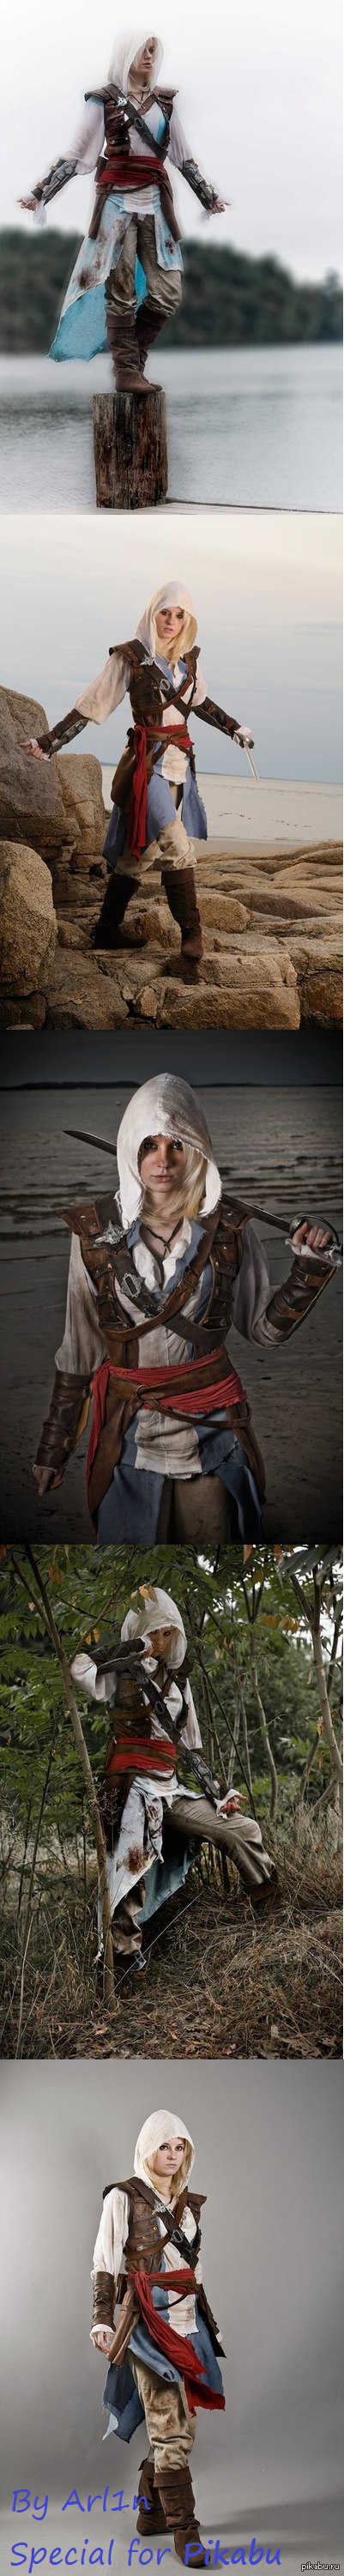 Assassin's Creed IV cosplay part II Alexa Karii